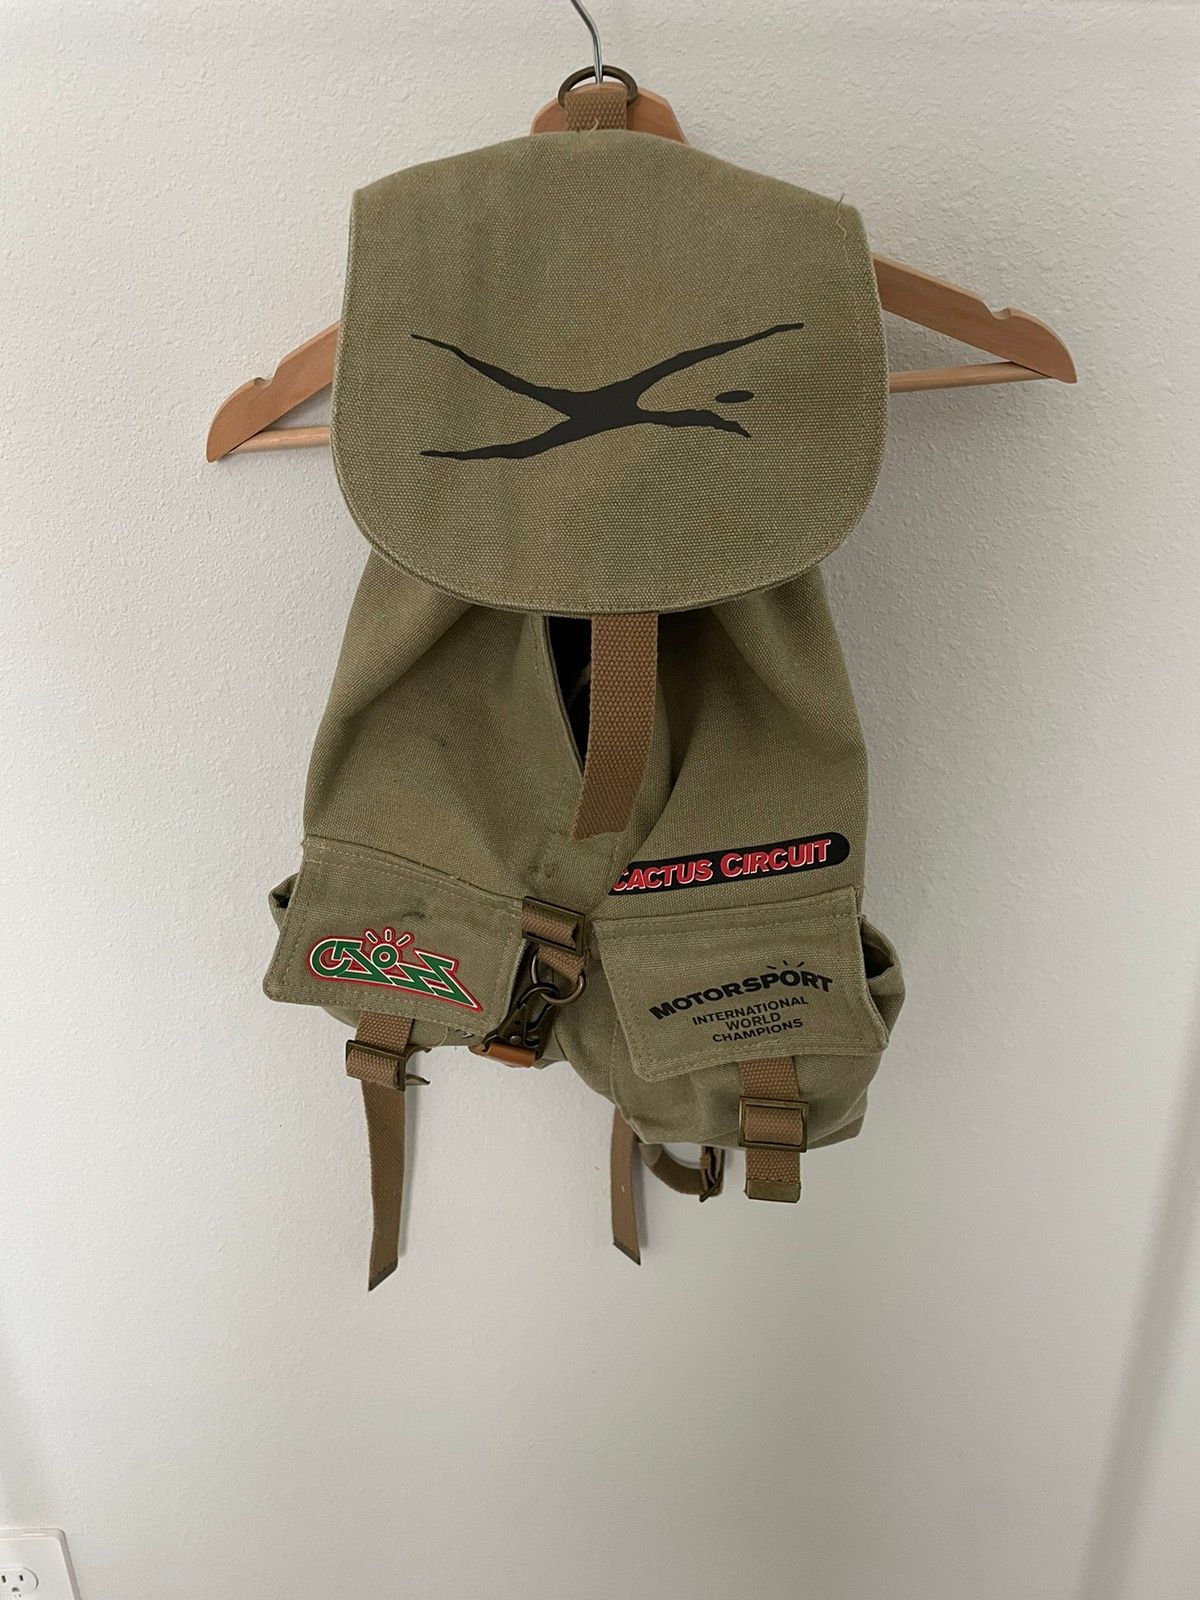 🎮Travis Scott Cactus Jack Backpack With - Traffic Sneakers